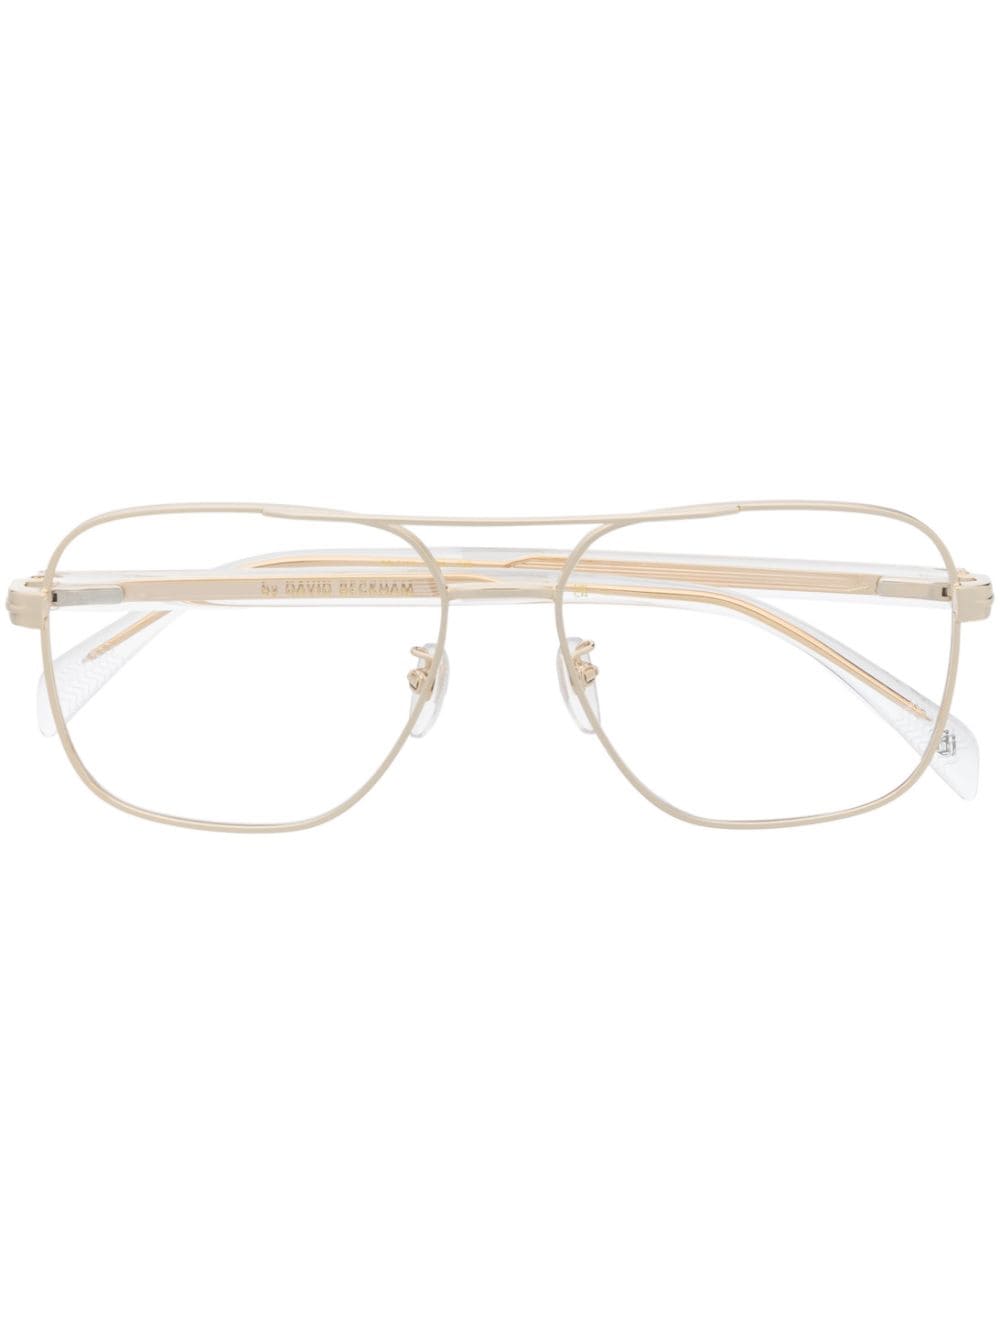 Eyewear by David Beckham Loj transparent-frame glasses - Gold von Eyewear by David Beckham